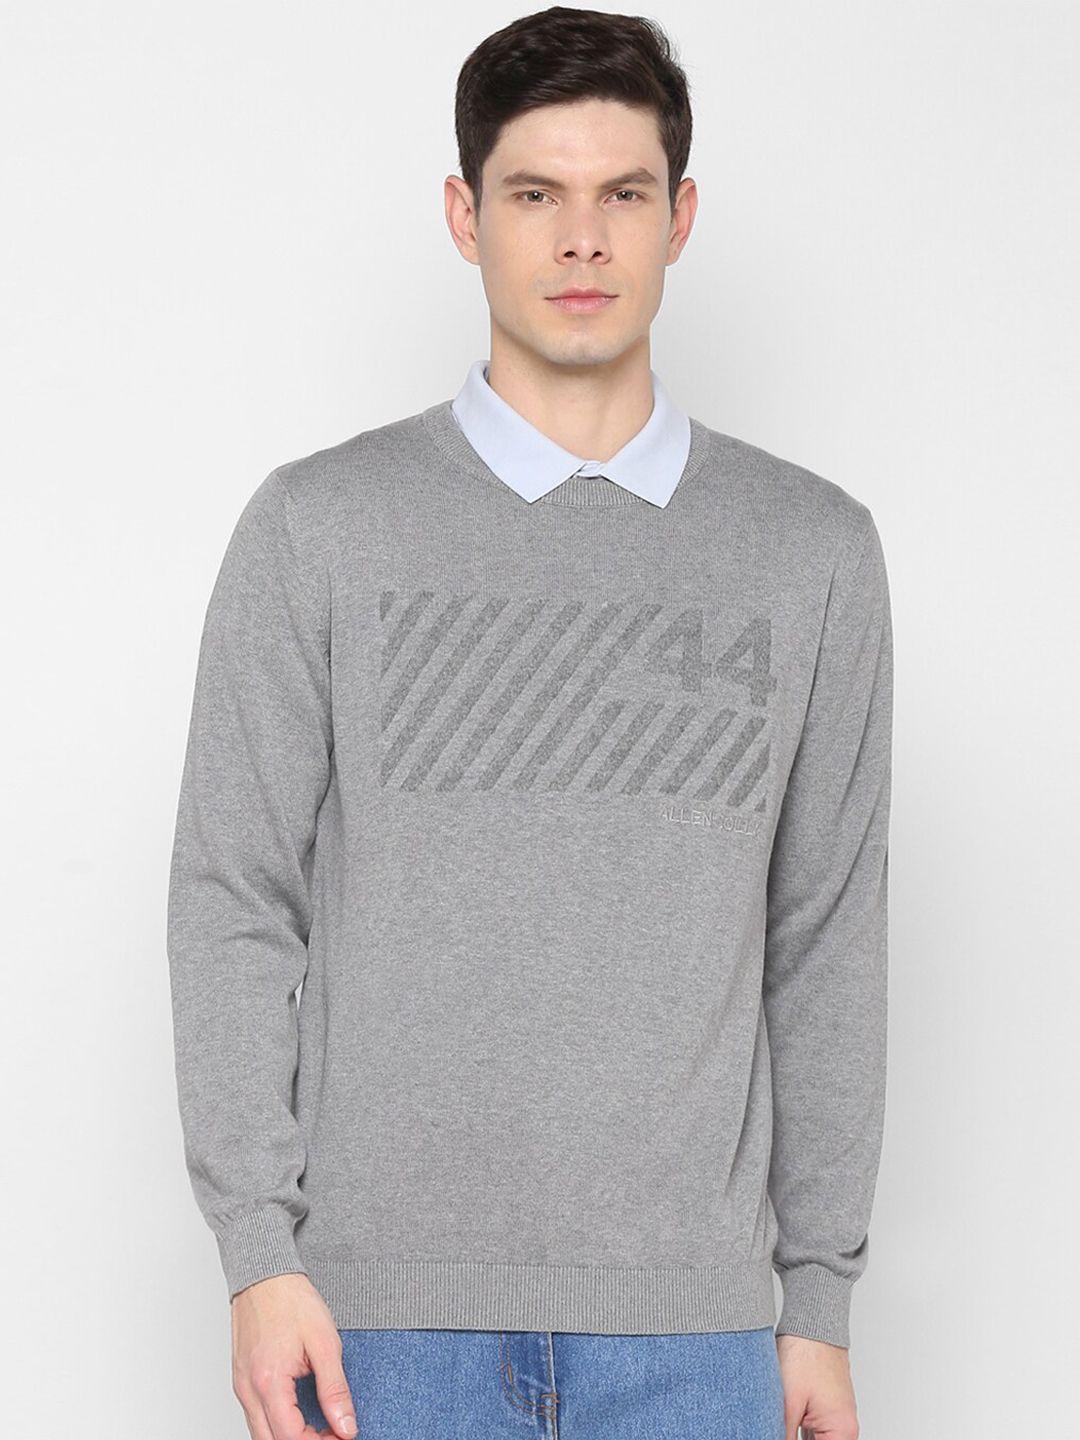 allen solly sport men grey pure cotton printed pullover sweater